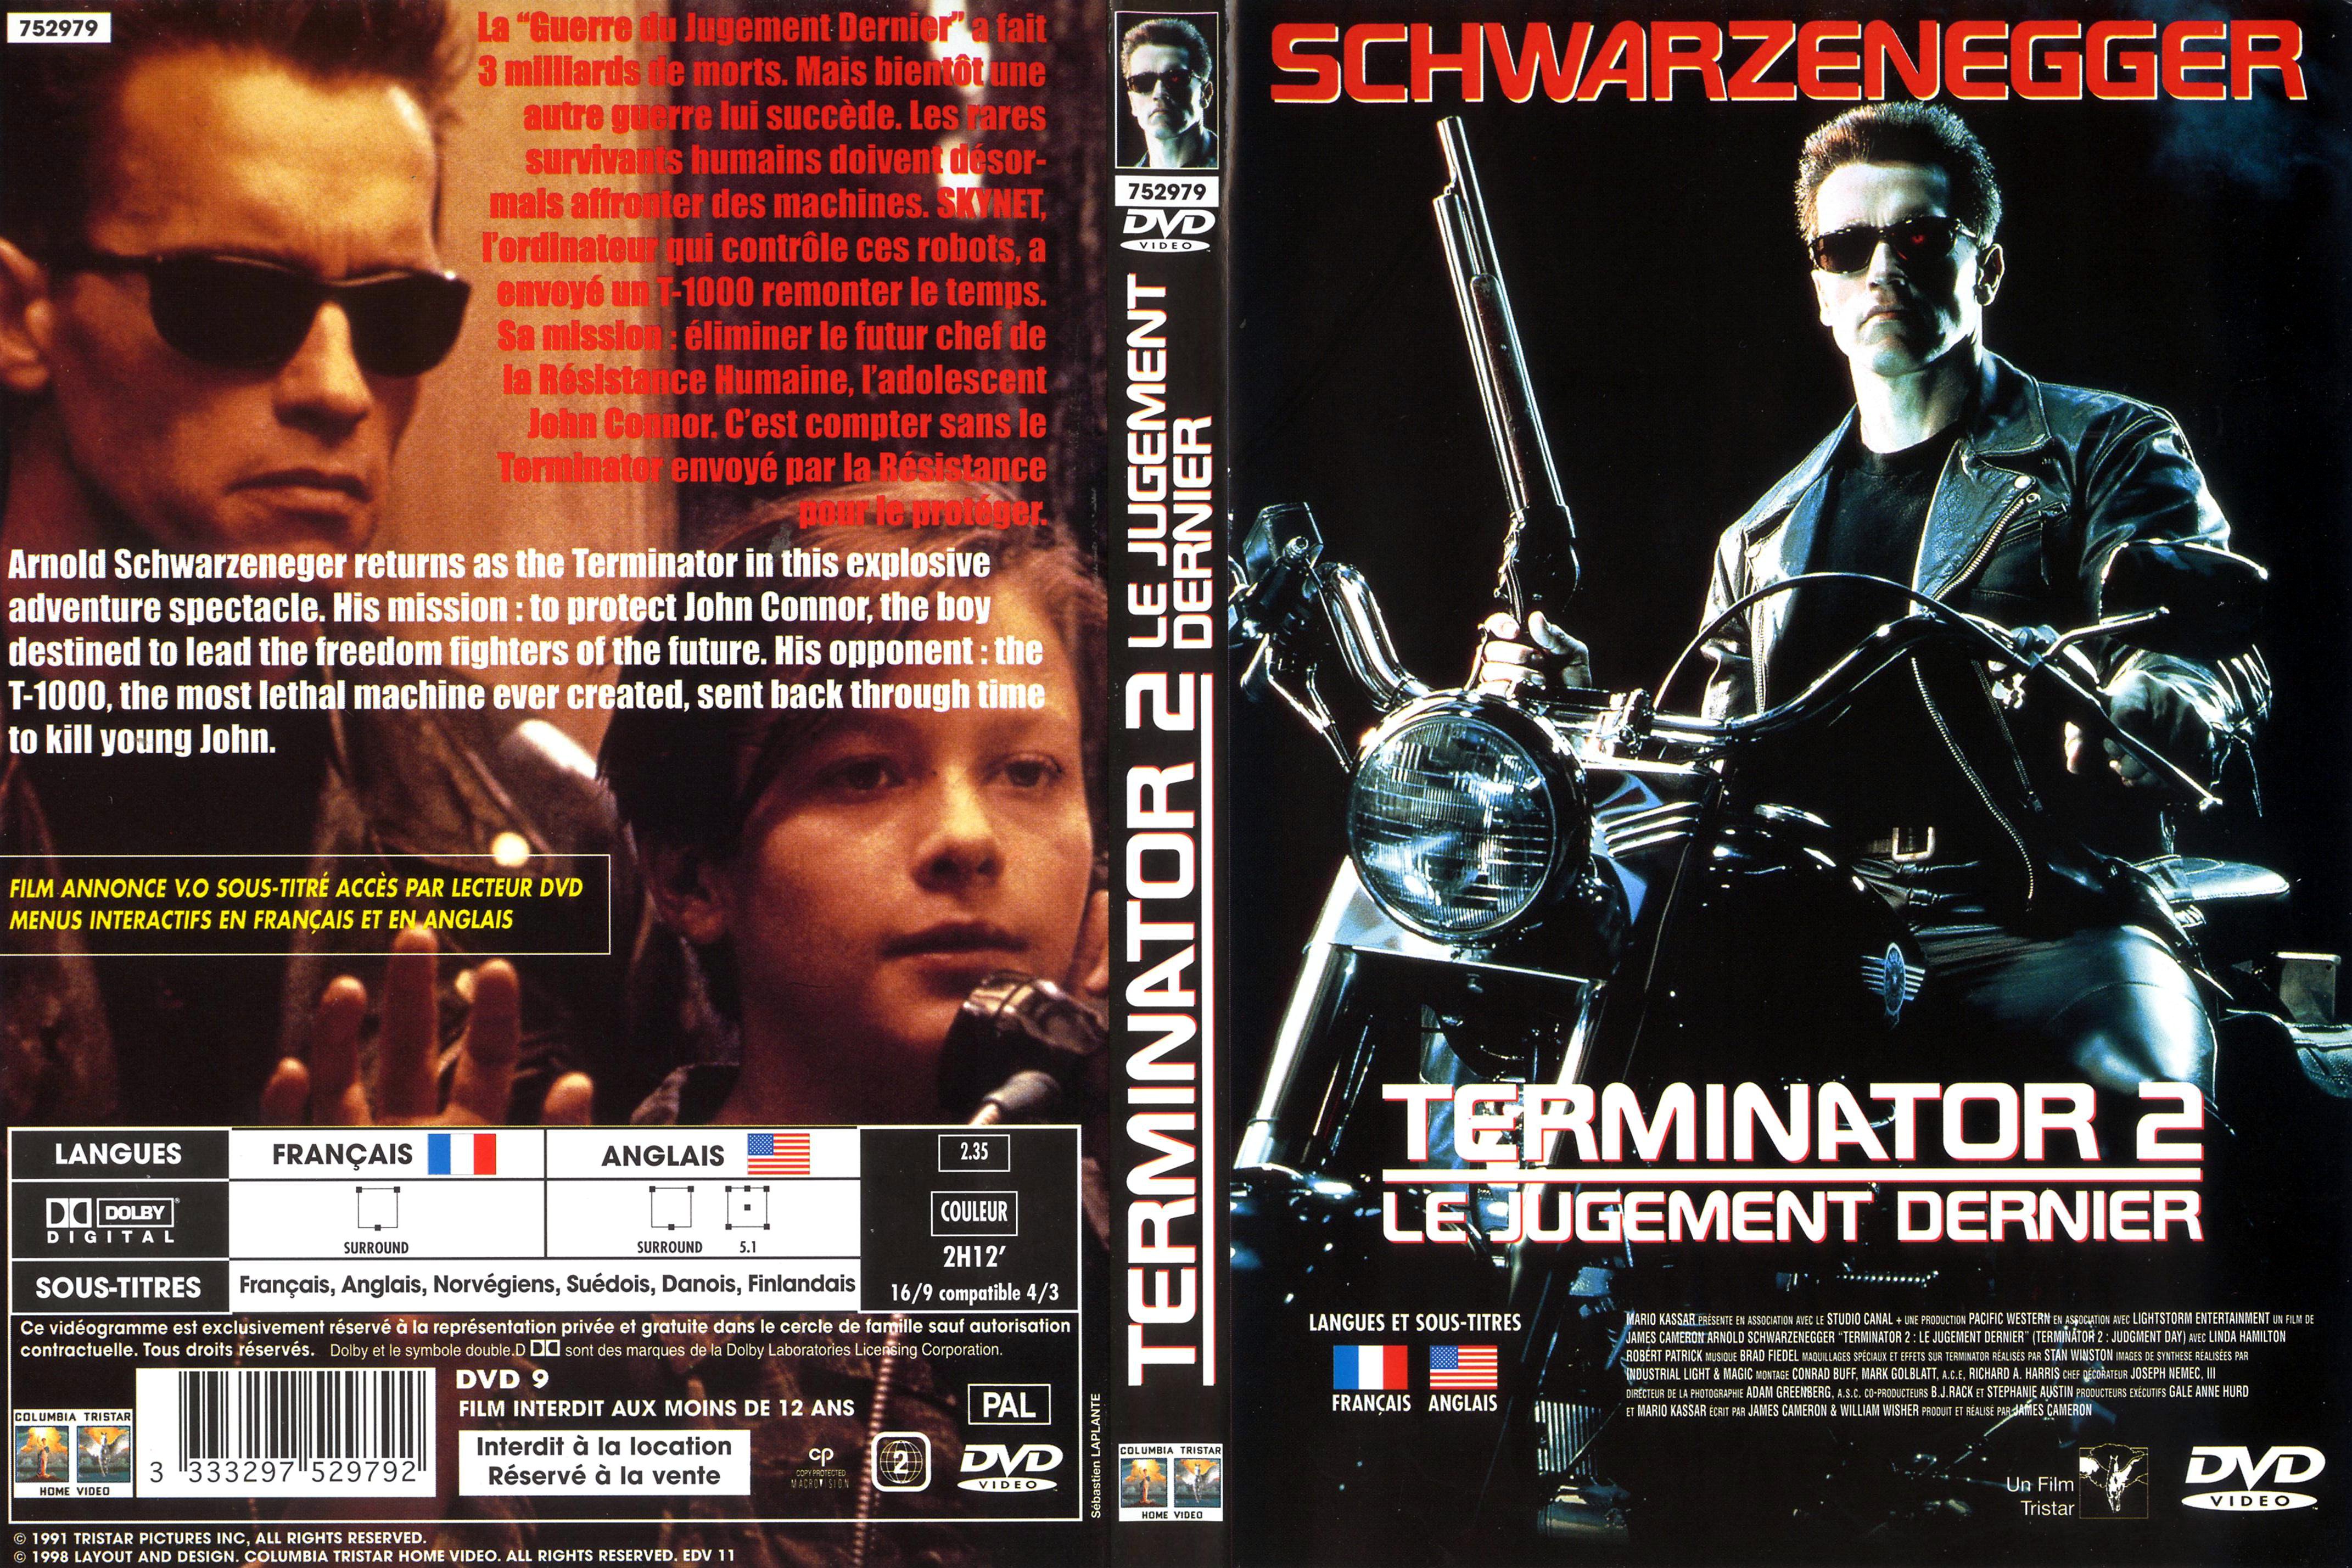 Jaquette DVD Terminator 2 v3